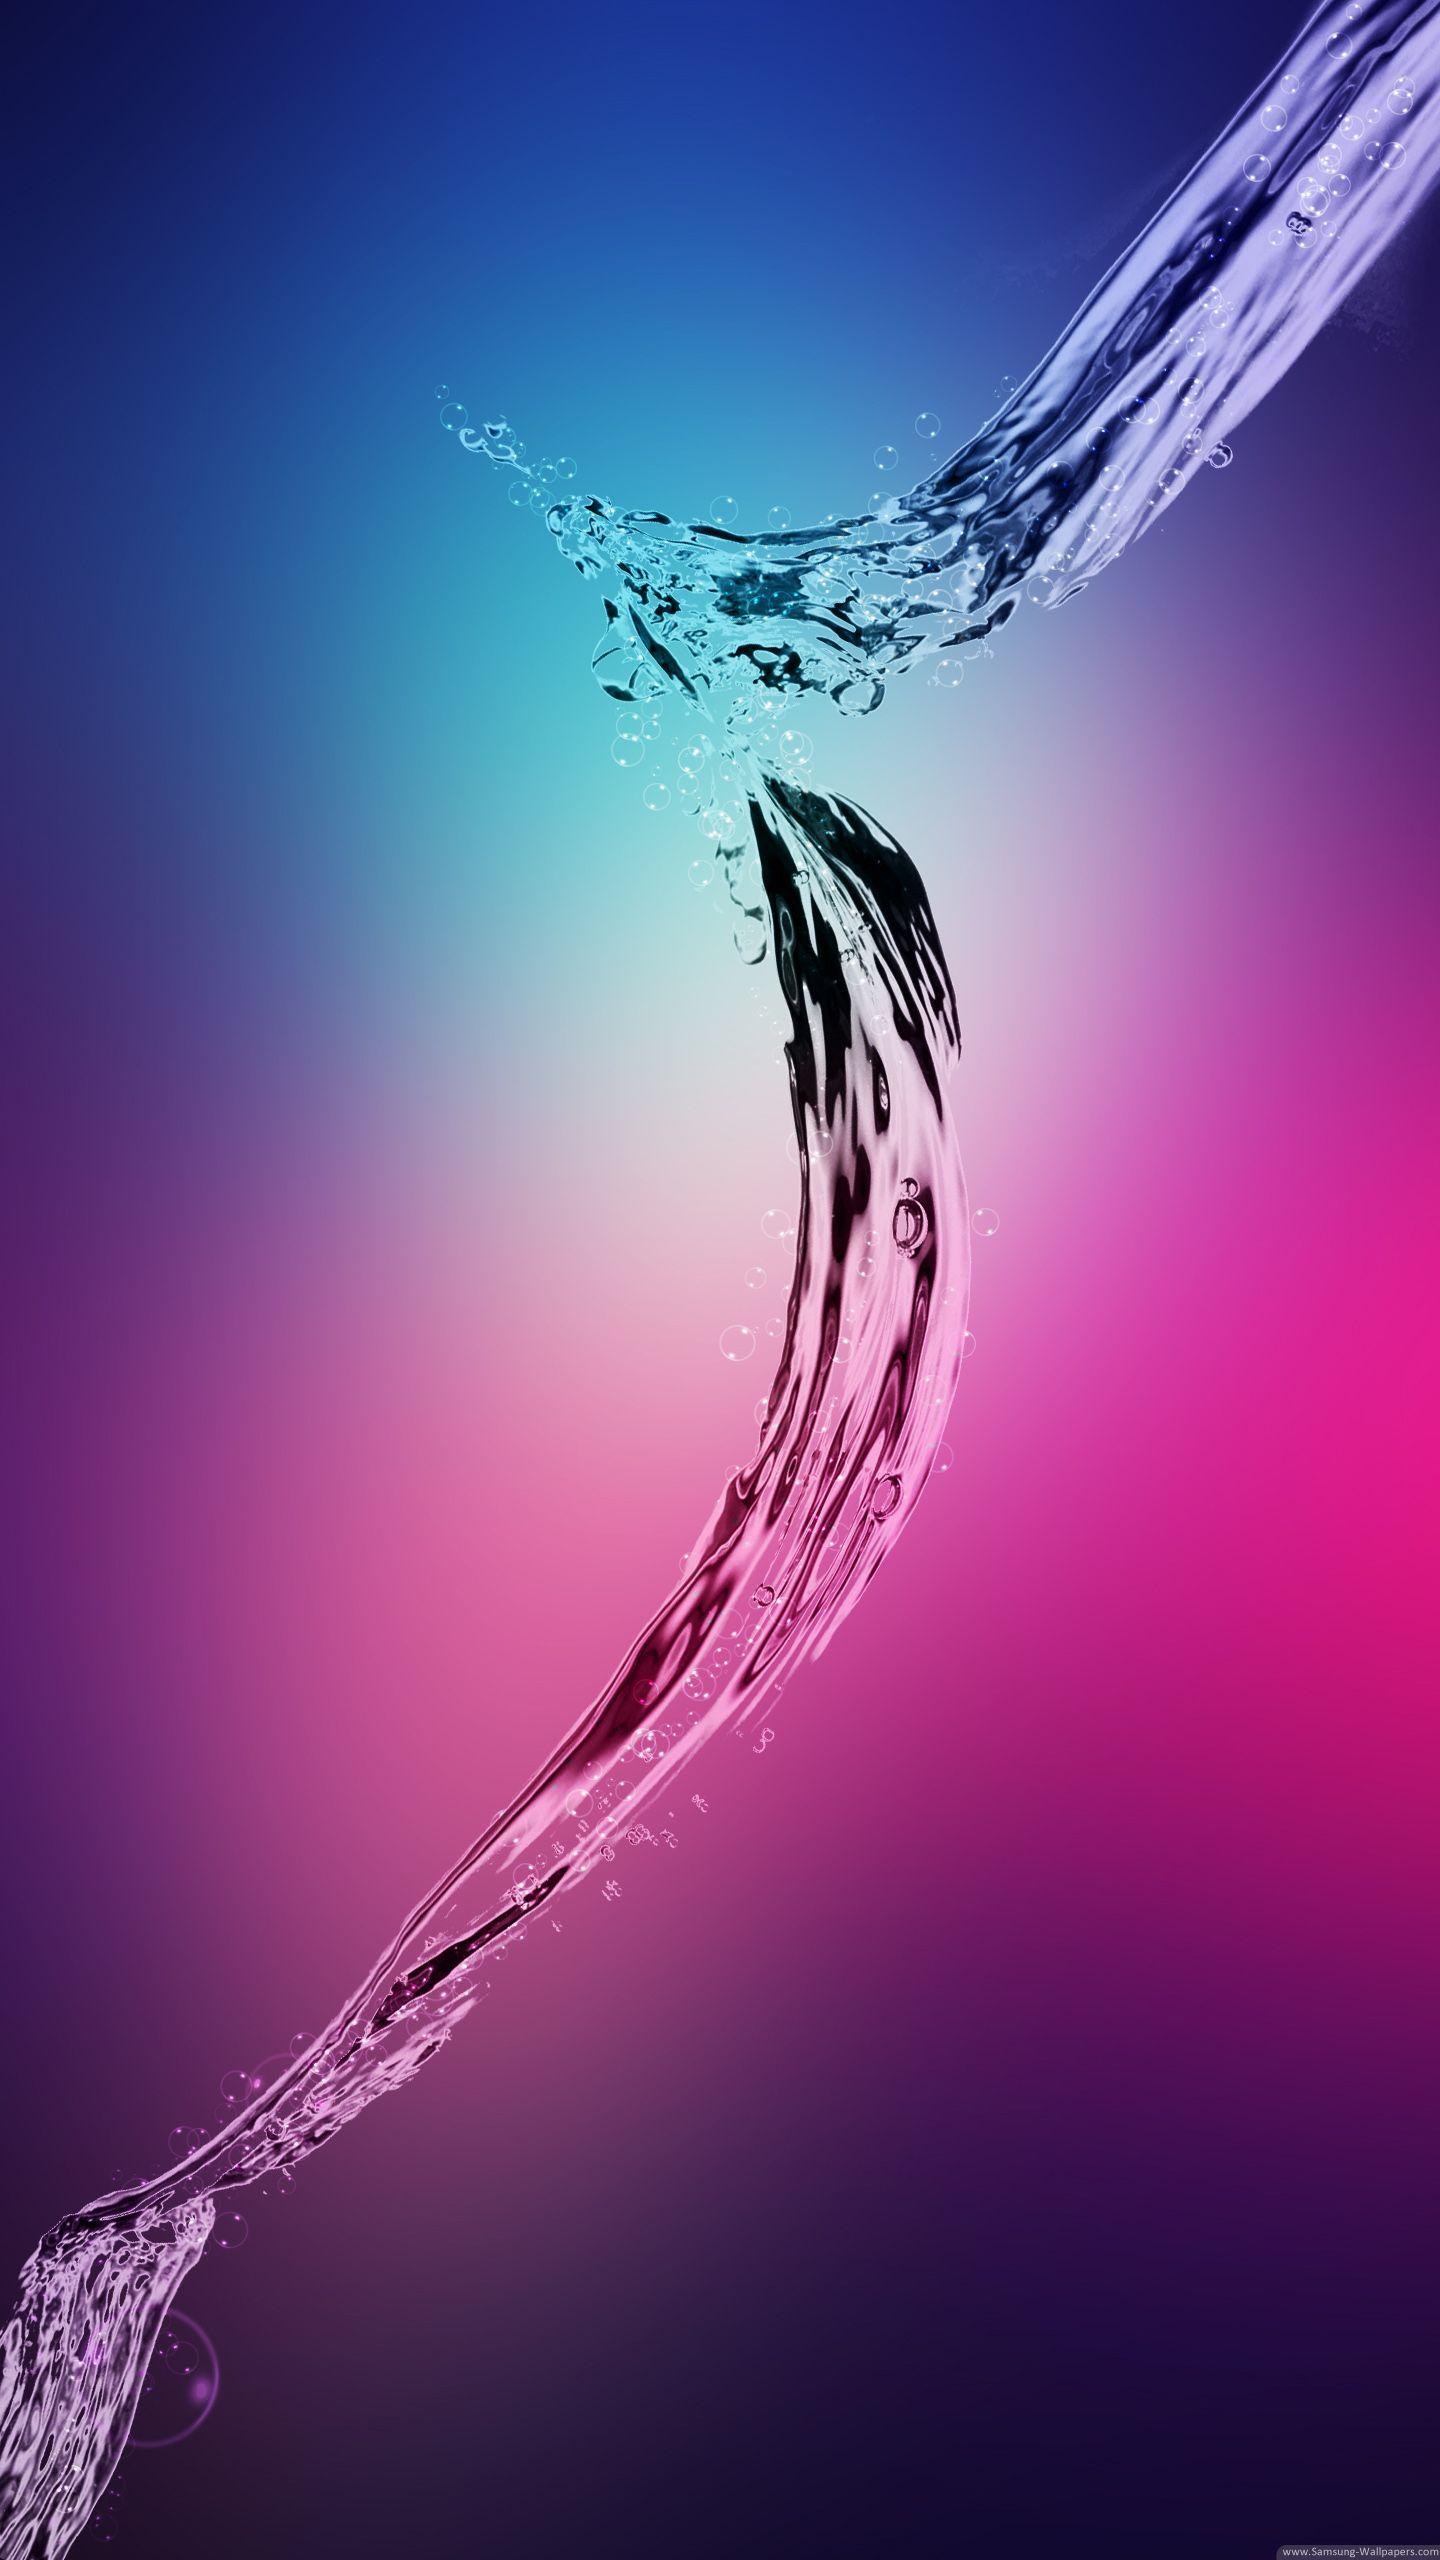 Cool water NOKIA mobile phone wallpaper